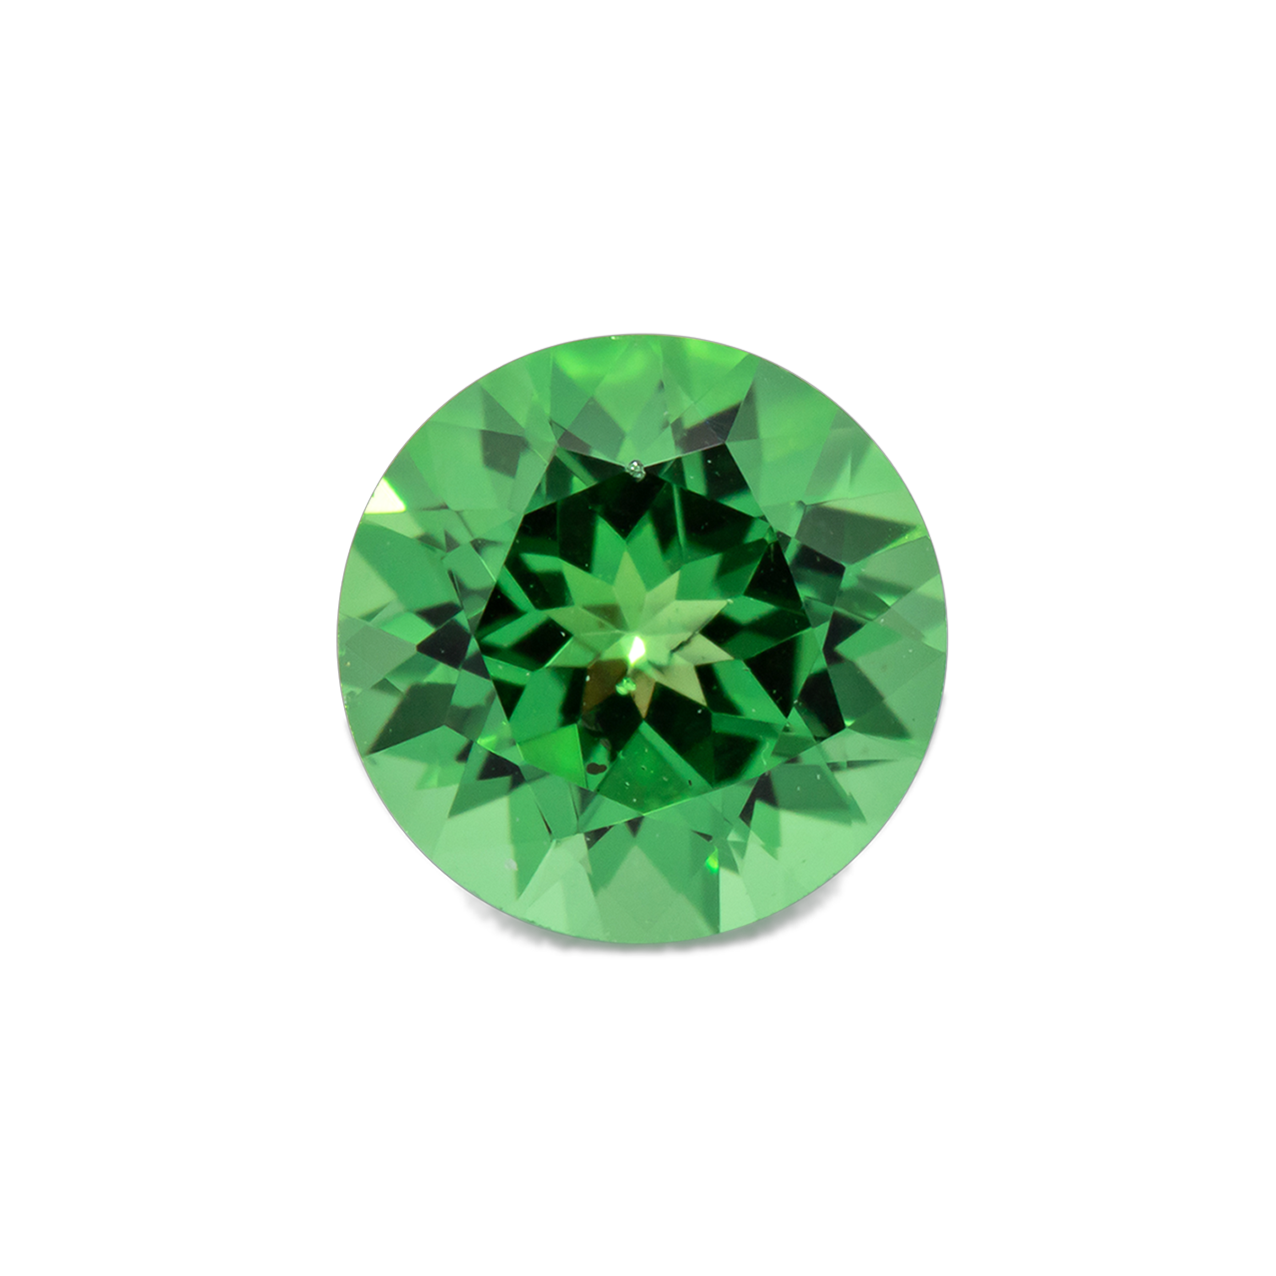 Tsavorit - grün, rund, 4.5x4.5 mm, 0.39 - 0.40 cts, Nr. TS91013